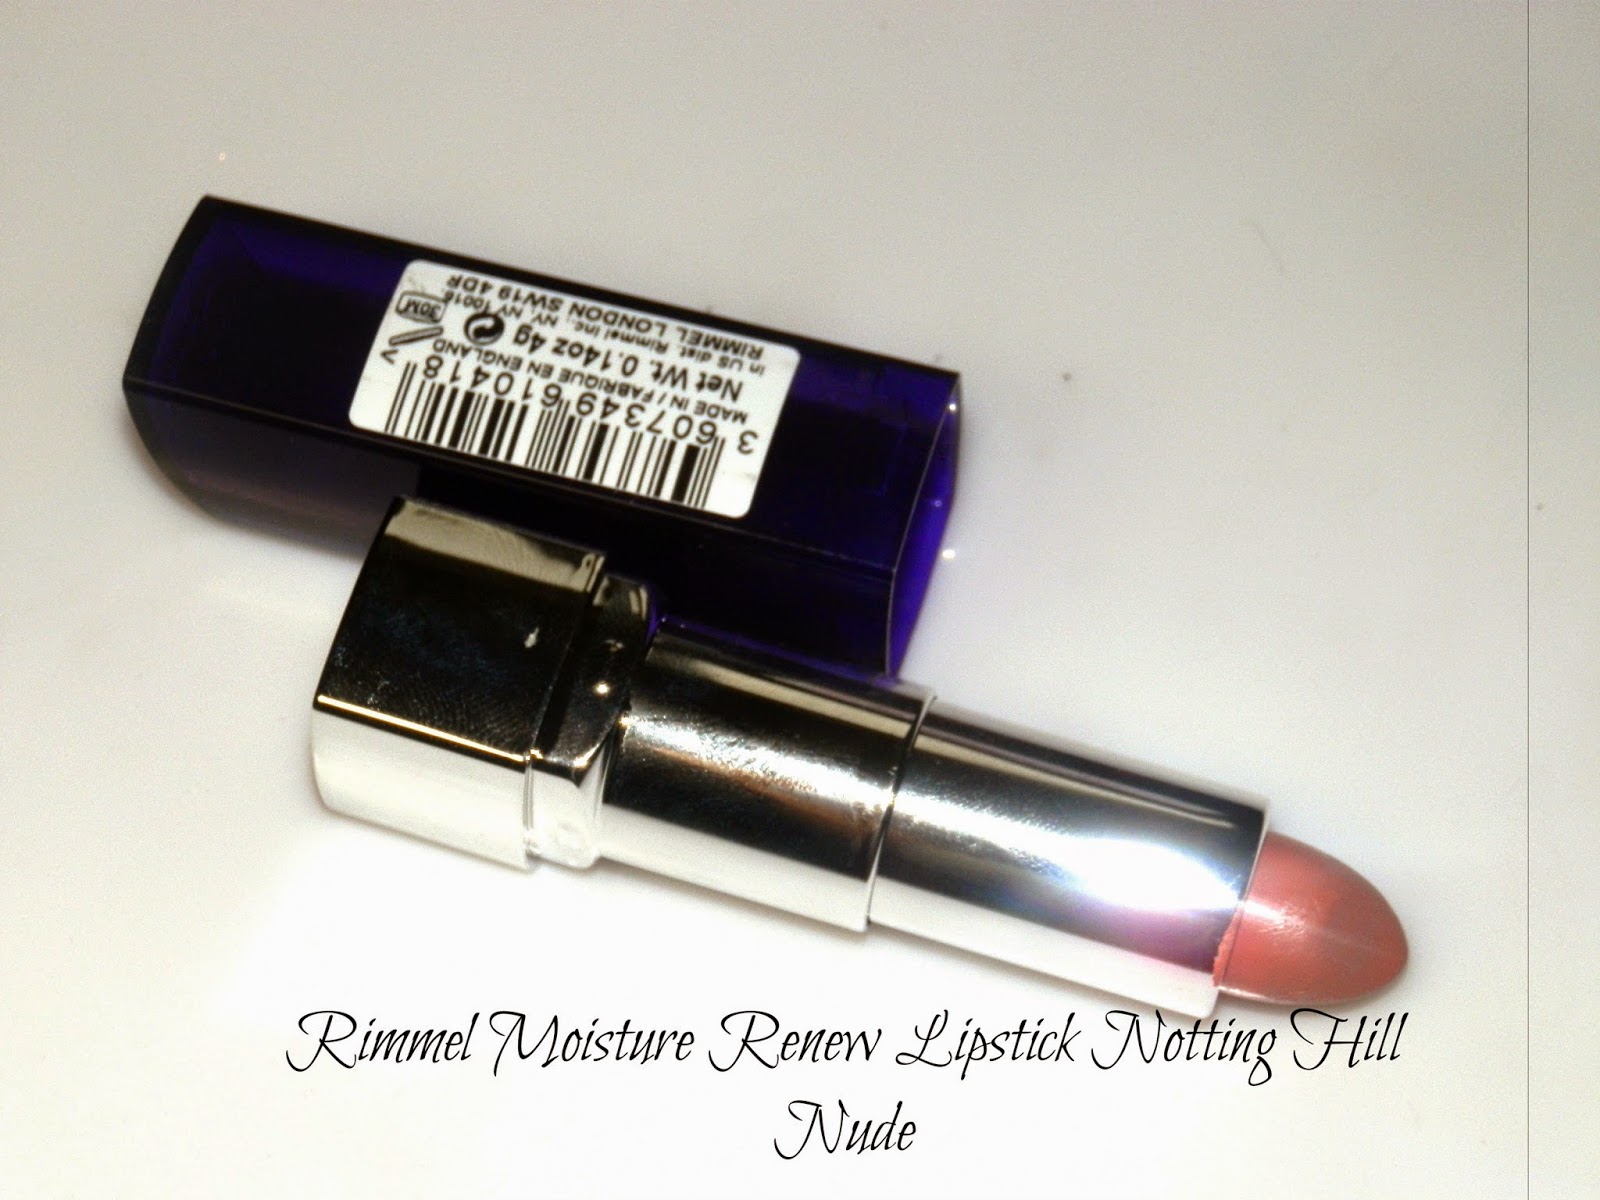 Rimmel Moisture Renew Lipstick Notting Hill Nude 720 Swatches